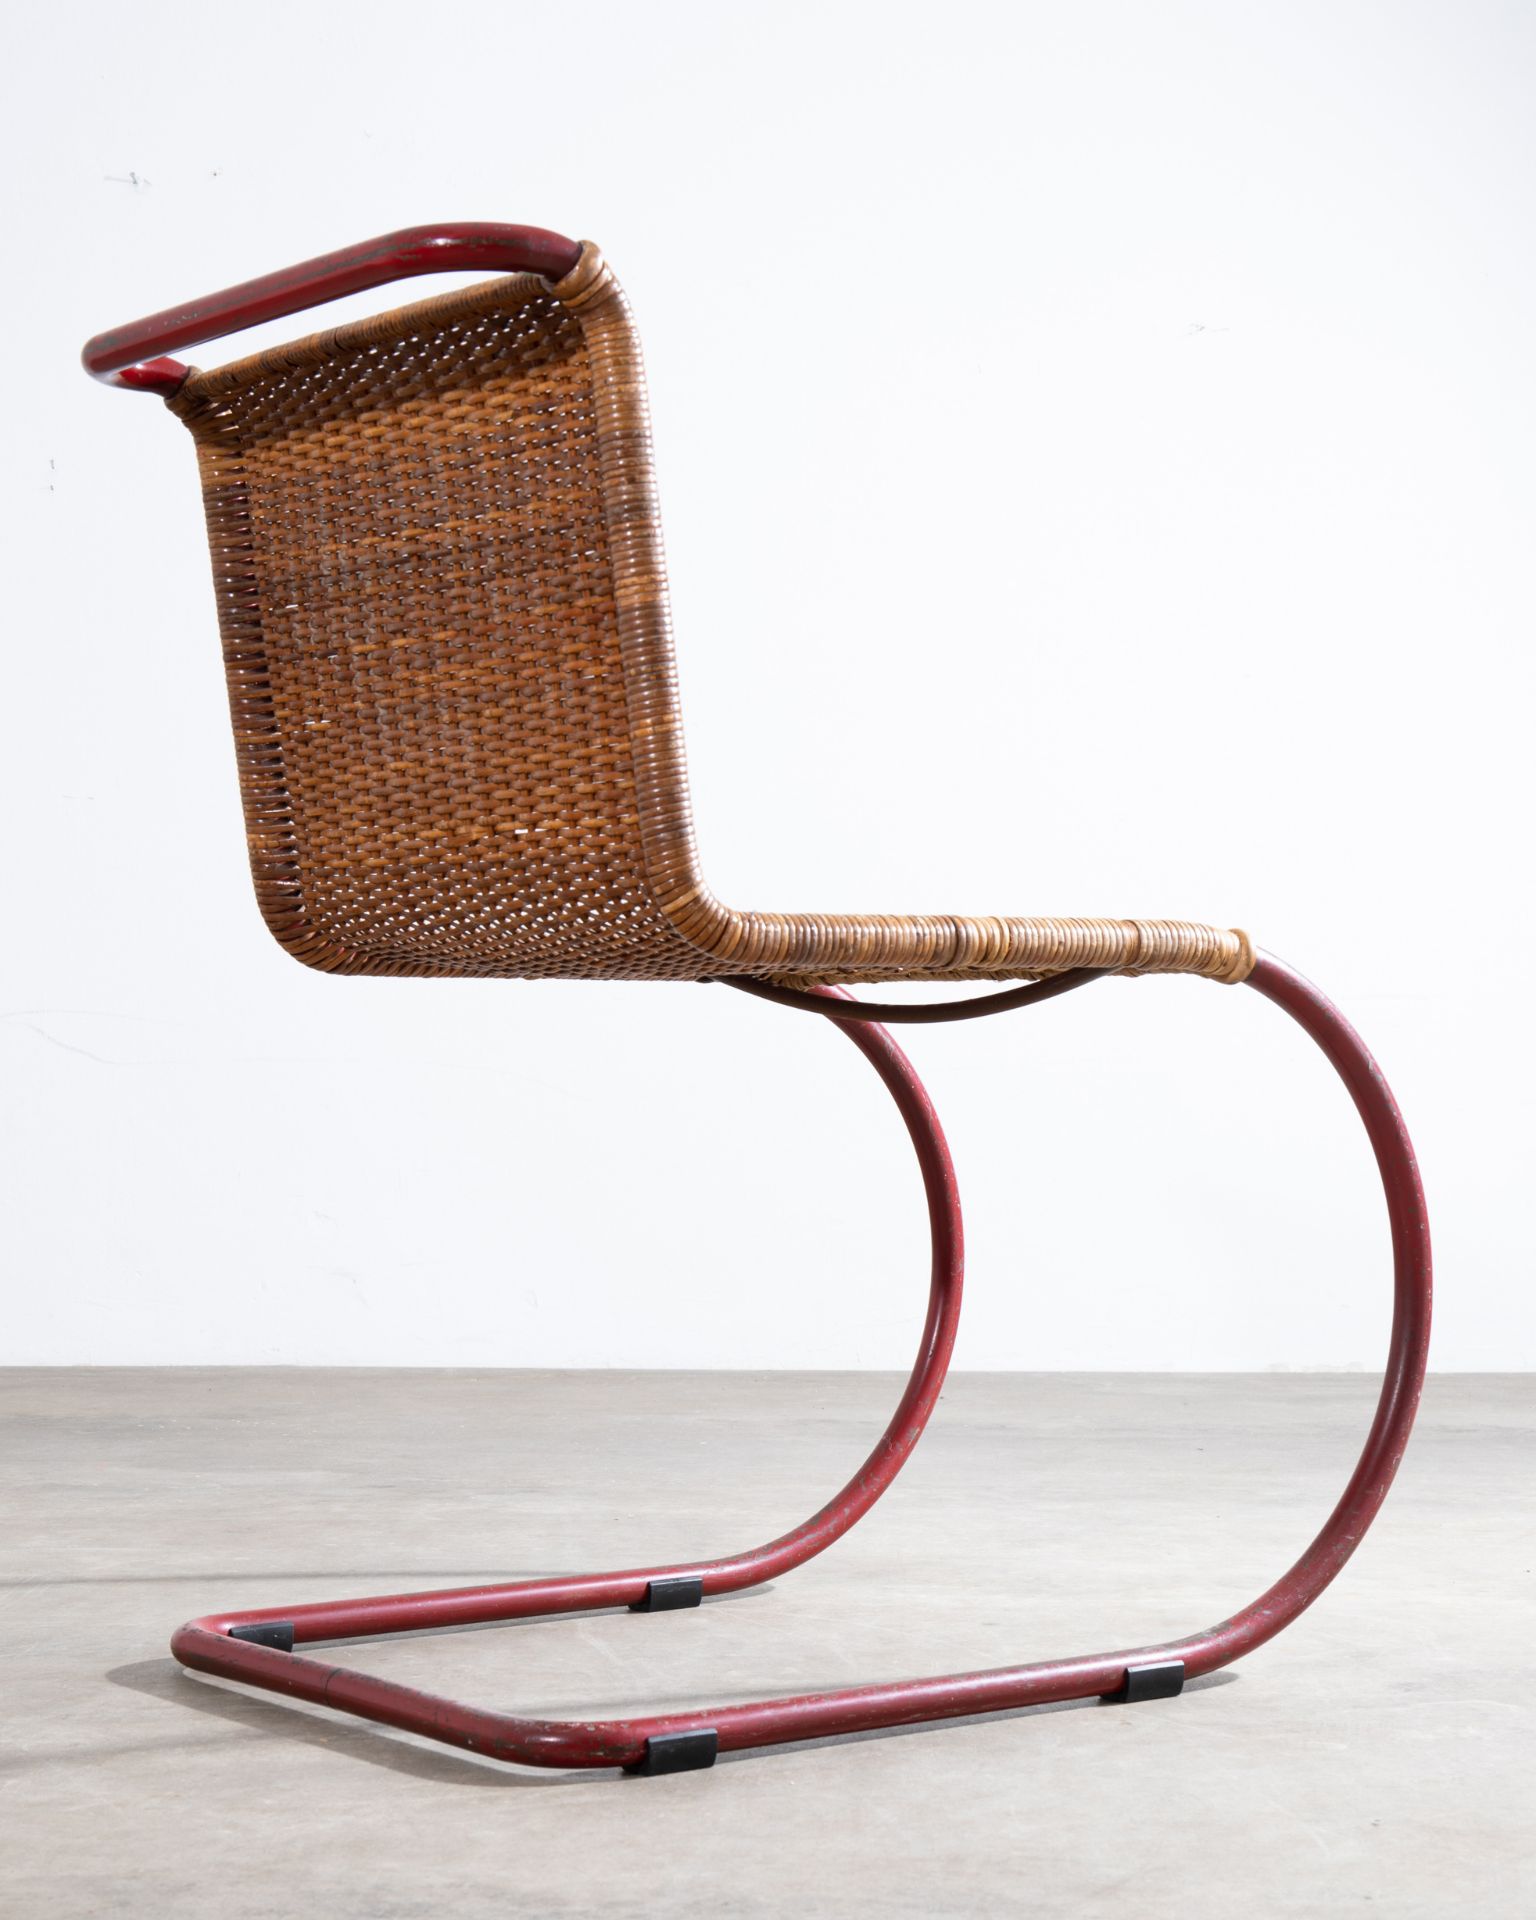 L. Mies van der Rohe, Berliner Metallgewerbe J. Müller, early MR 10 cantilever chair - Image 3 of 5